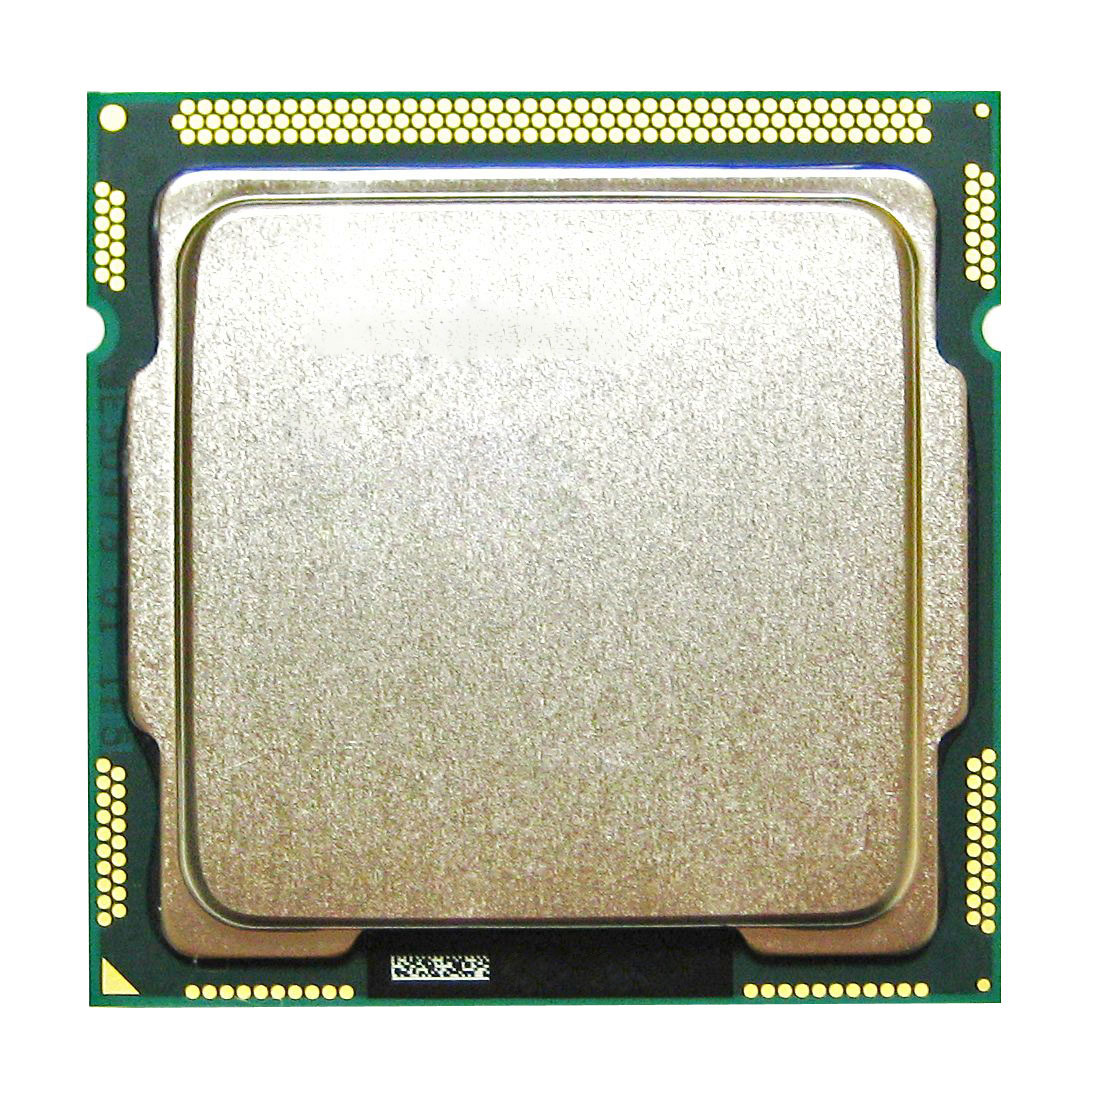 71Y6962-06 IBM 3.33GHz 2.50GT/s DMI 4MB L3 Cache Intel Core i5-660 Dual Core Desktop Processor Upgrade